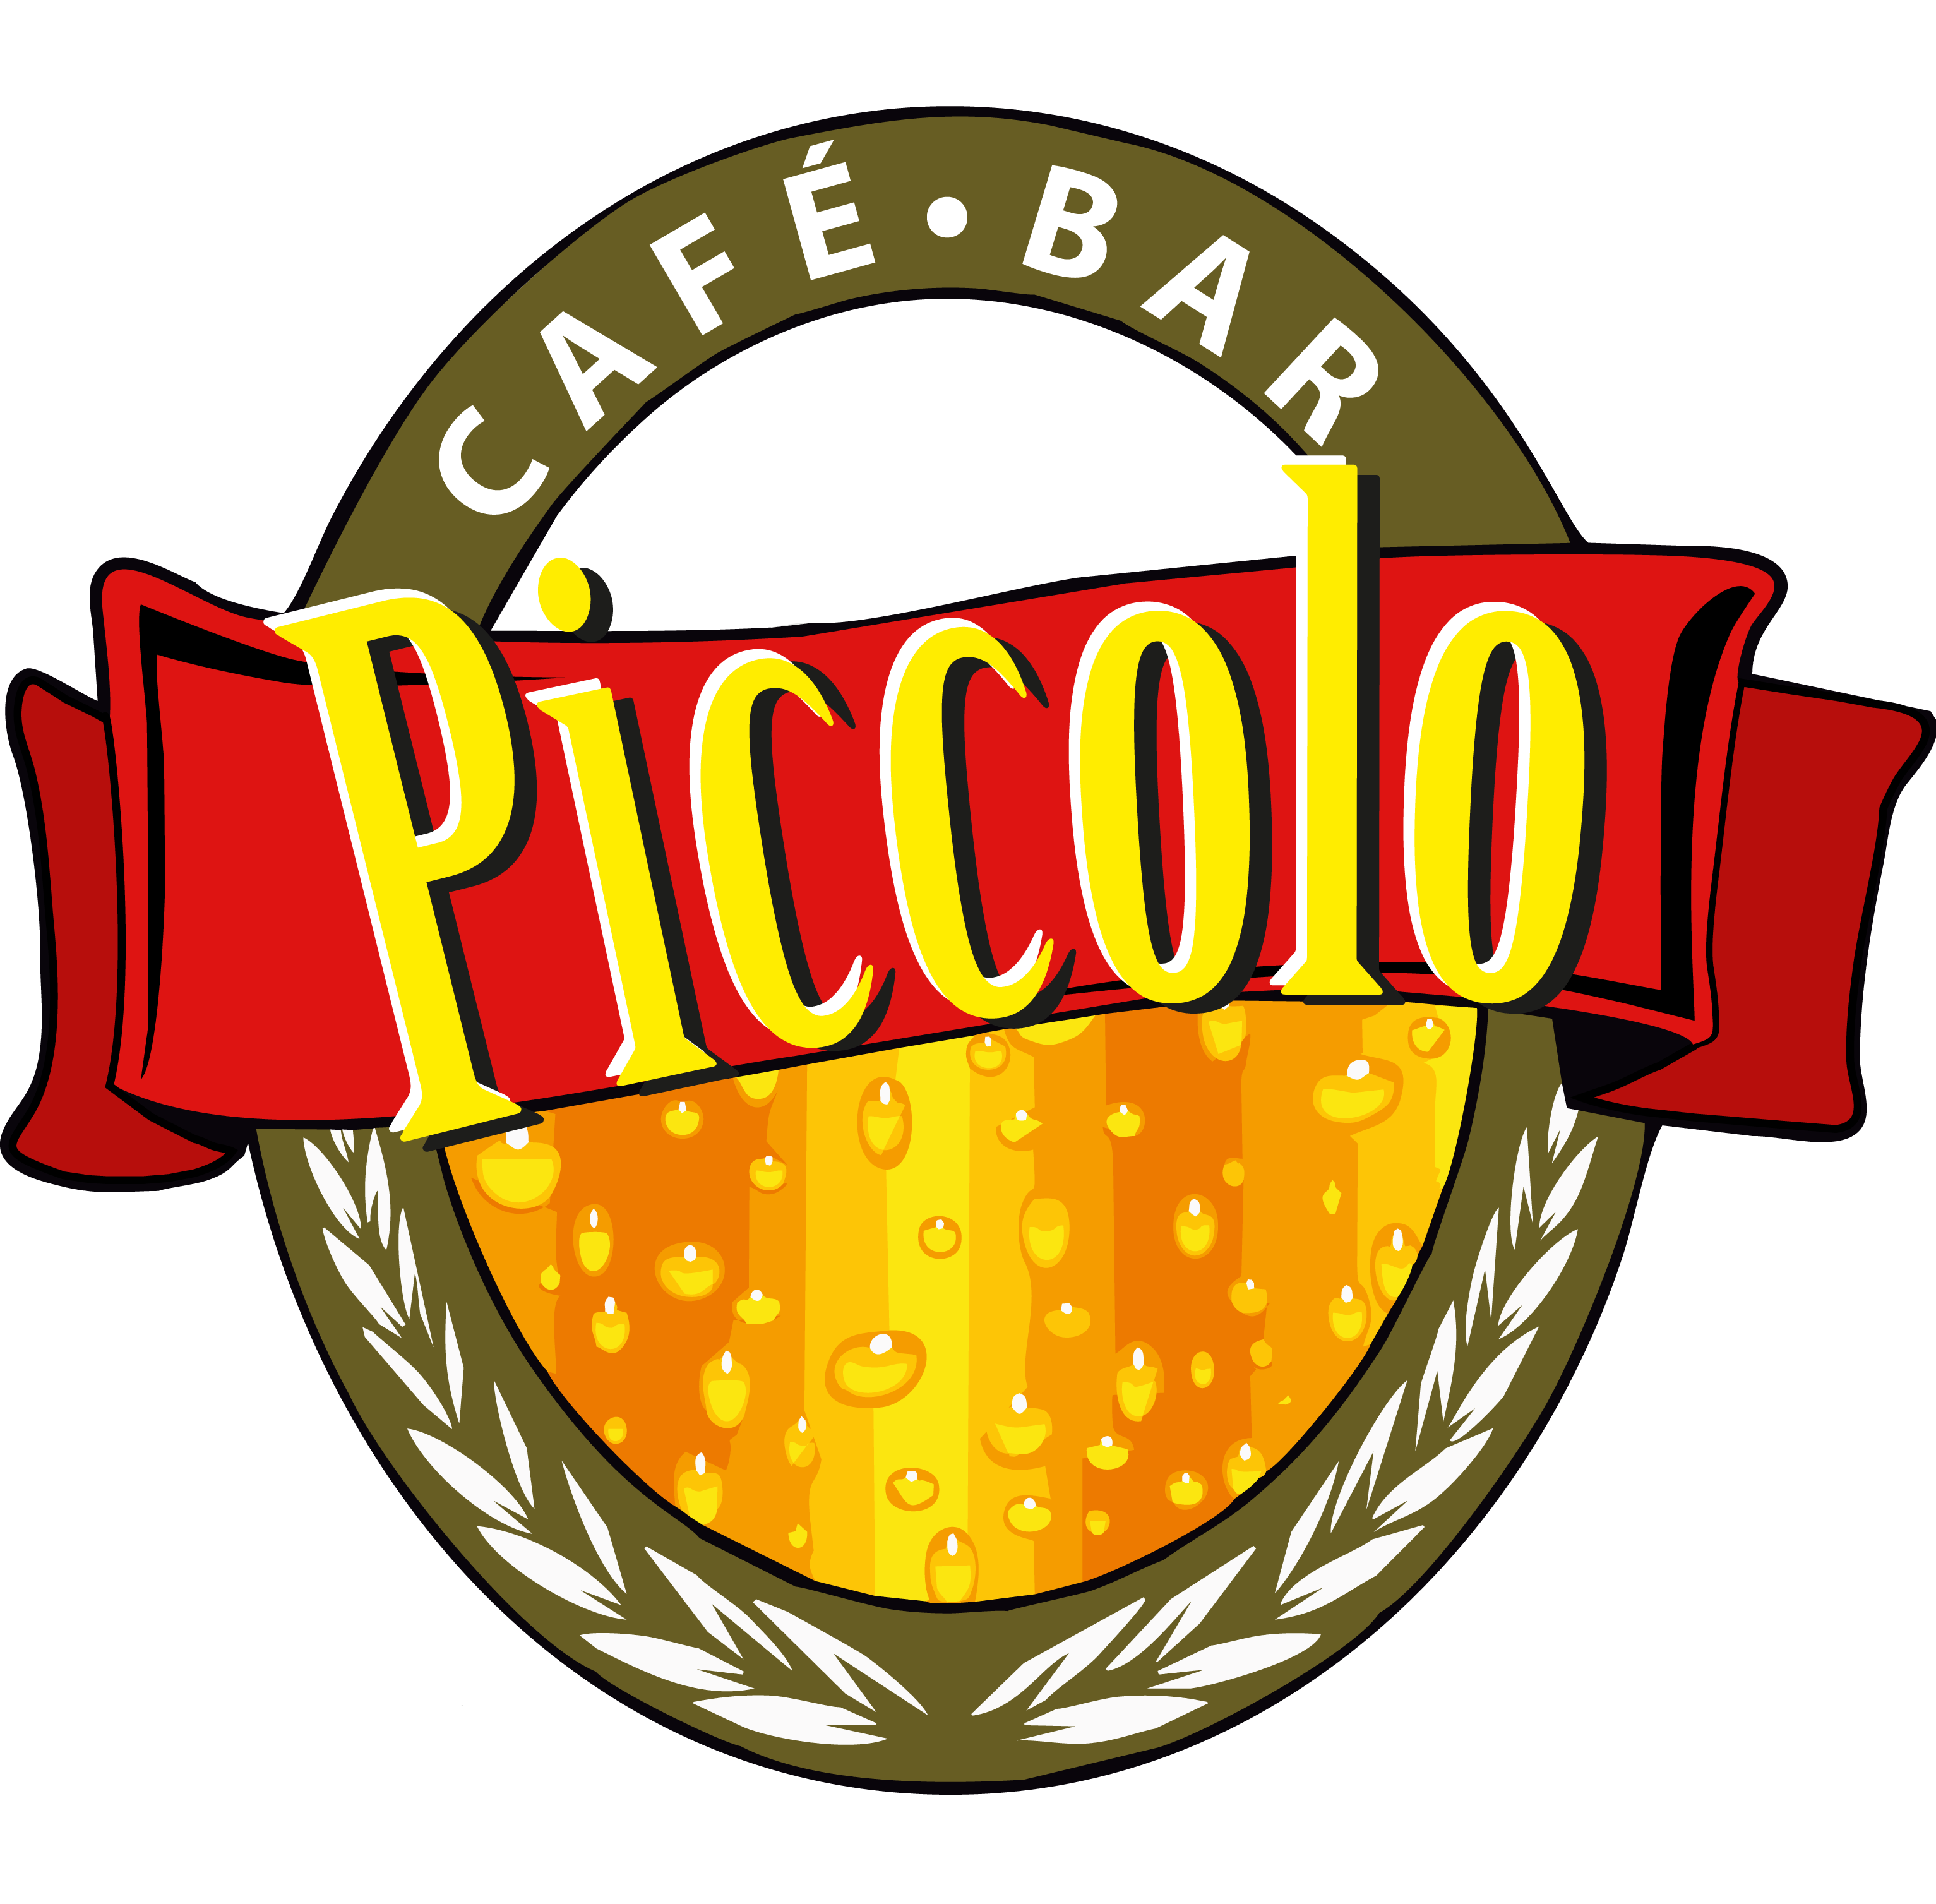 Cafe Piccolo in Spittal an der Drau